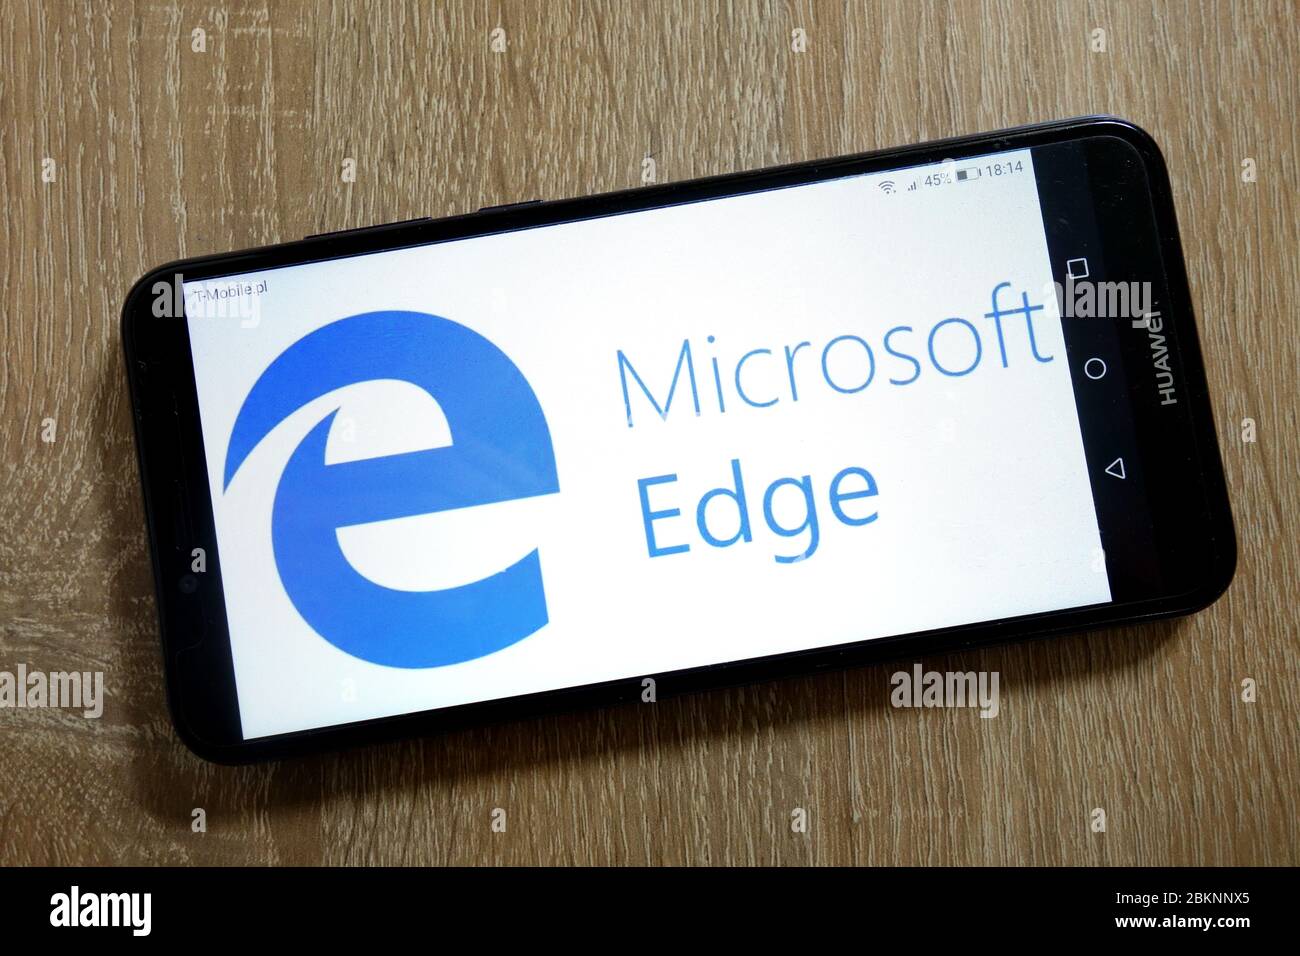 Microsoft Edge logo displayed on smartphone Stock Photo